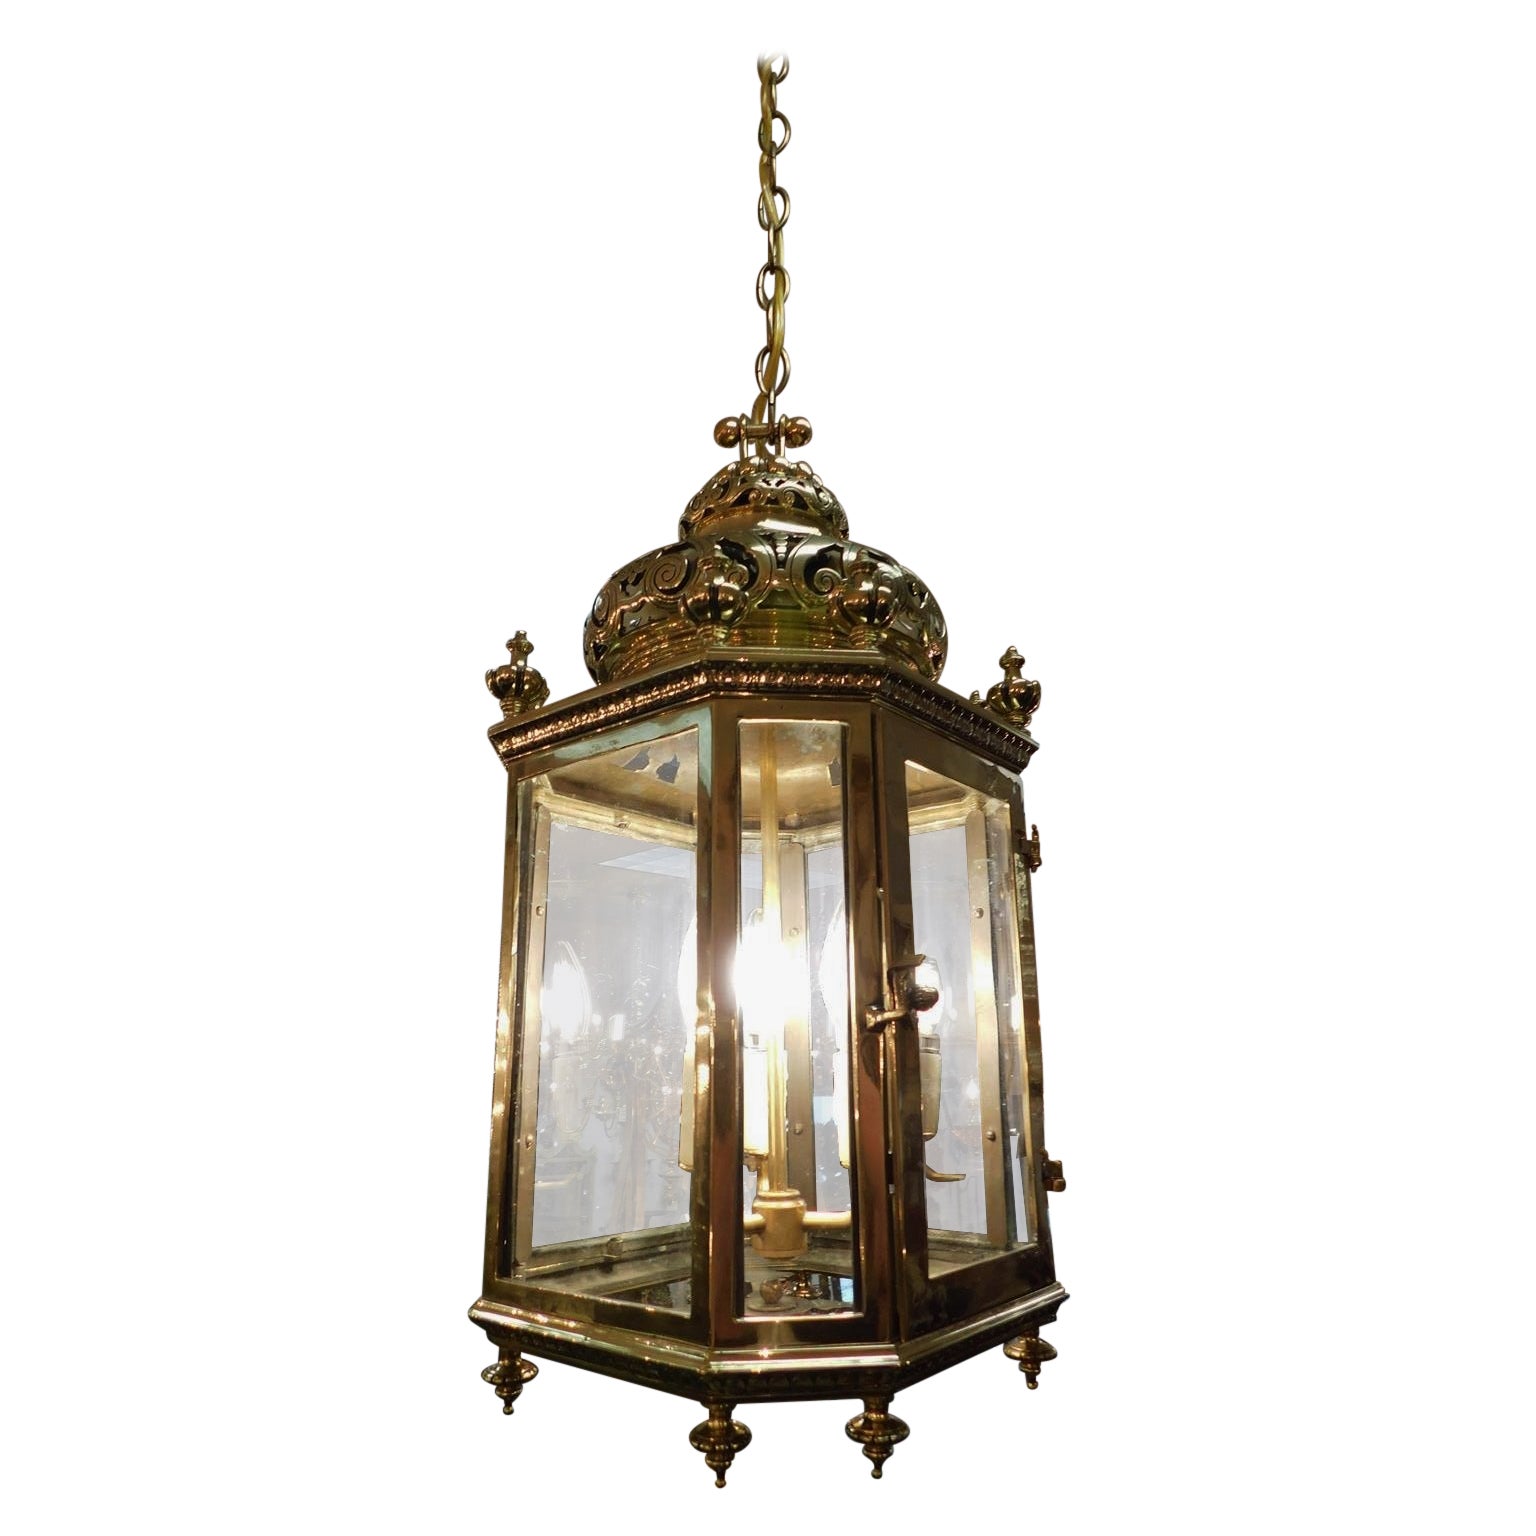 English Brass Octagon Decorative Chased Dome Glass Hall Lantern, Circa 1820